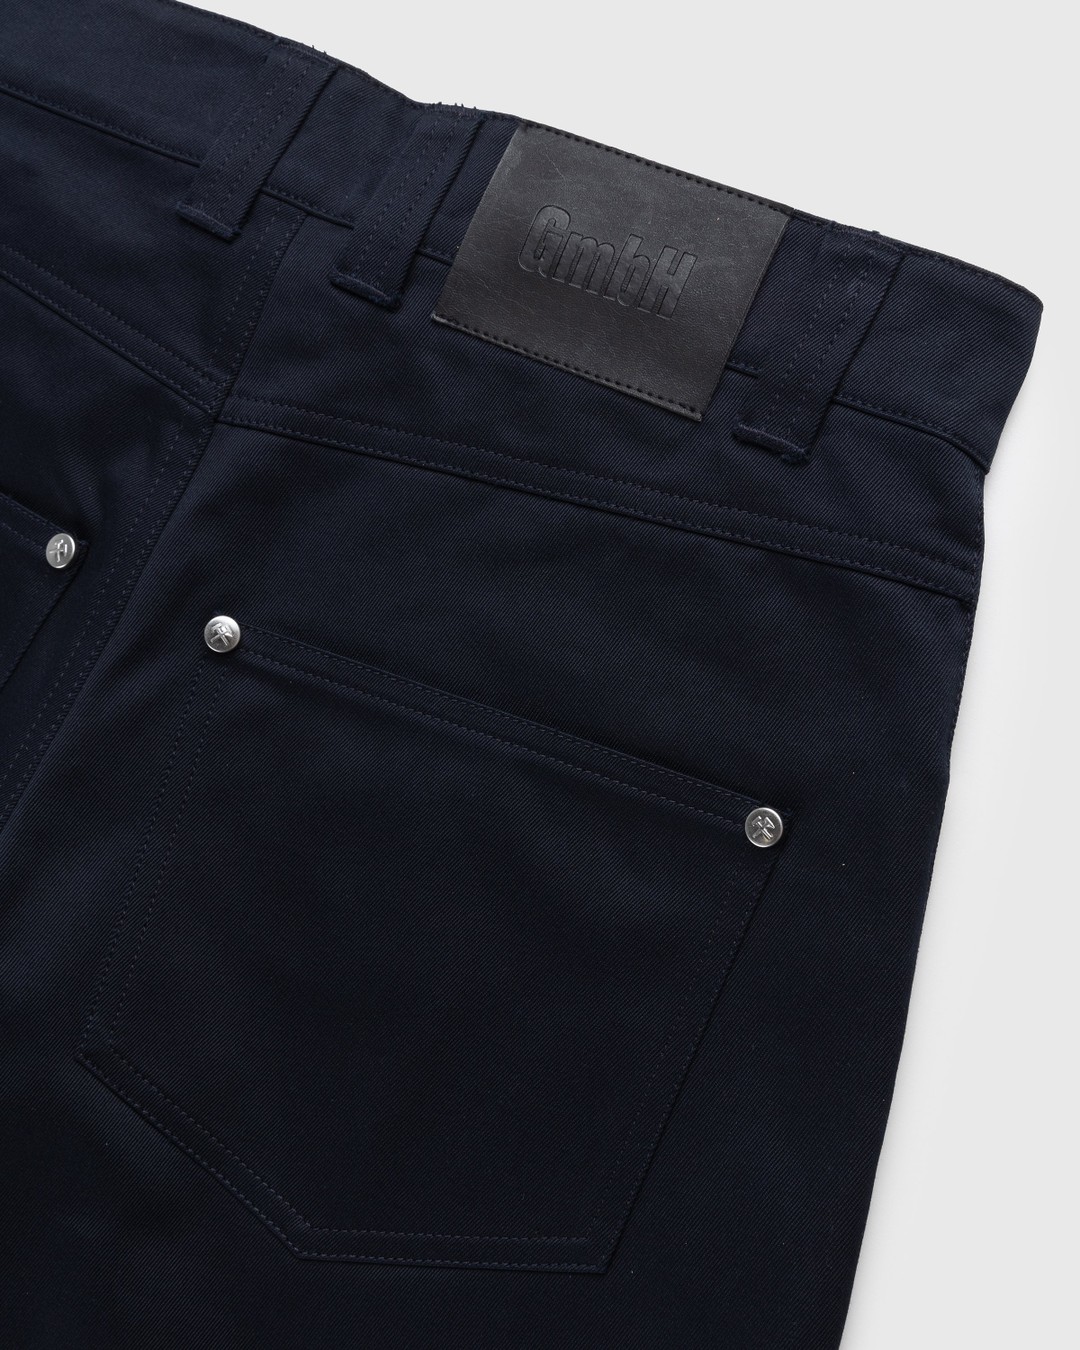 GmbH – Amir Double Zip Shorts Navy - Shorts - Blue - Image 3